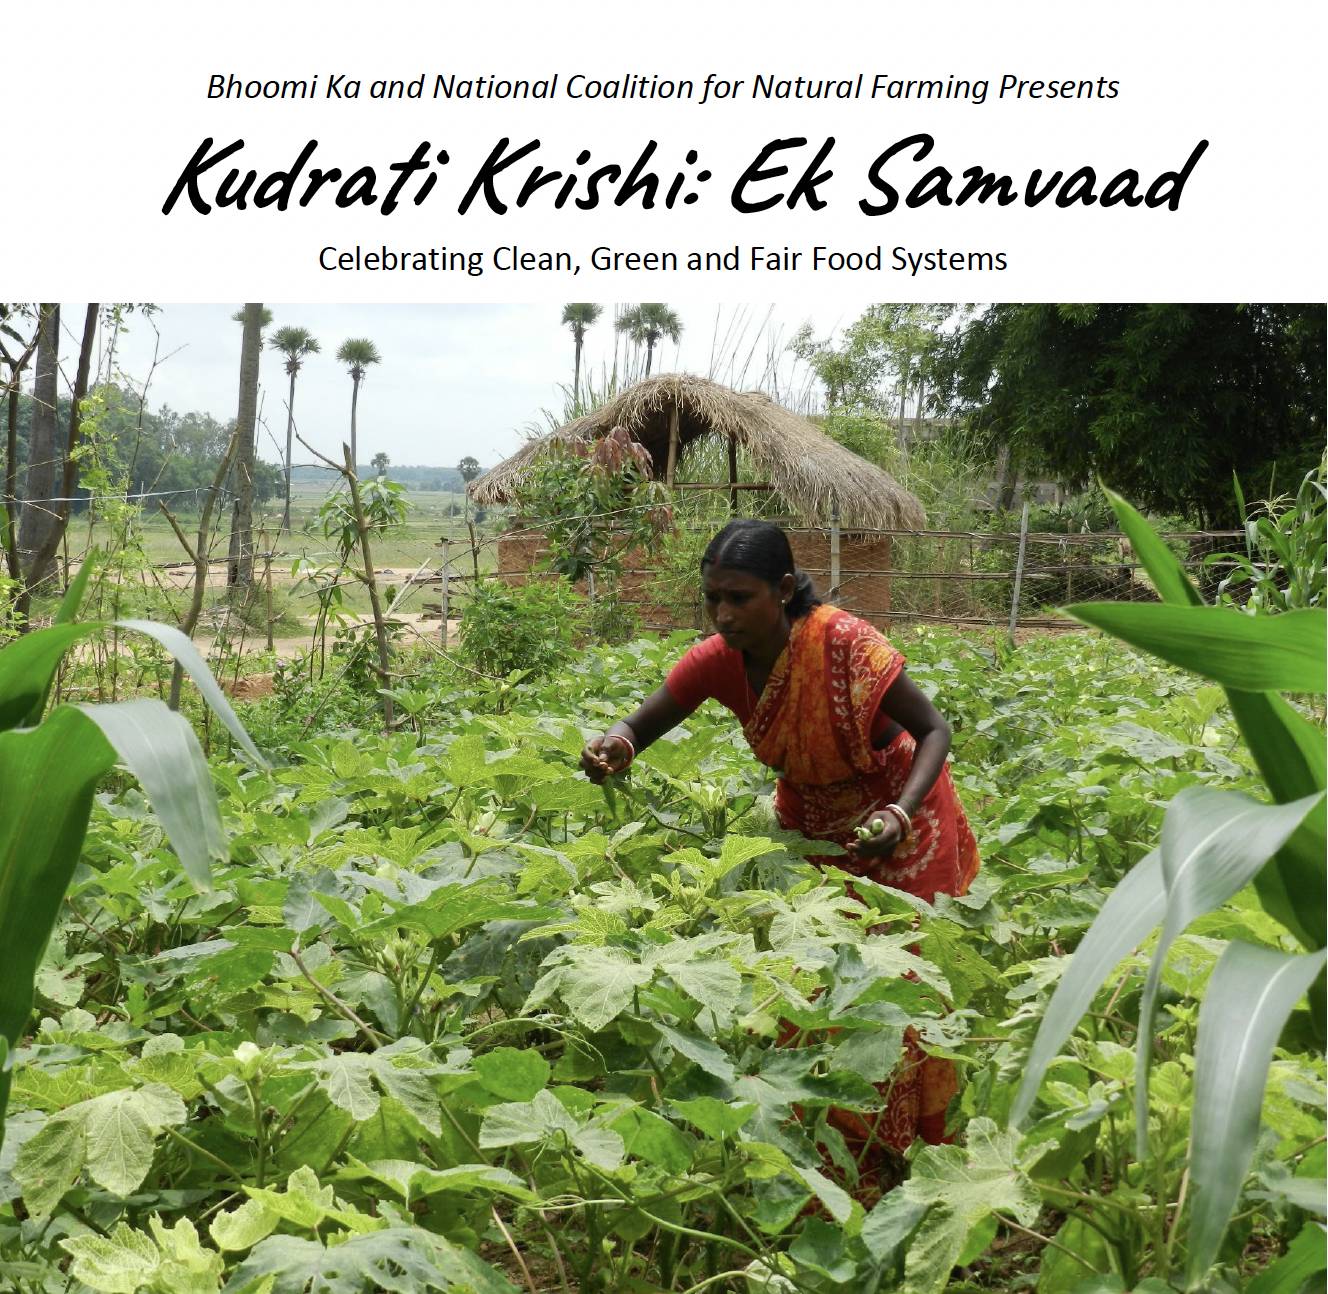 Kudrati Krishi: Ek Samuaad - Celebrating Clean, Green and Fair Food Systems